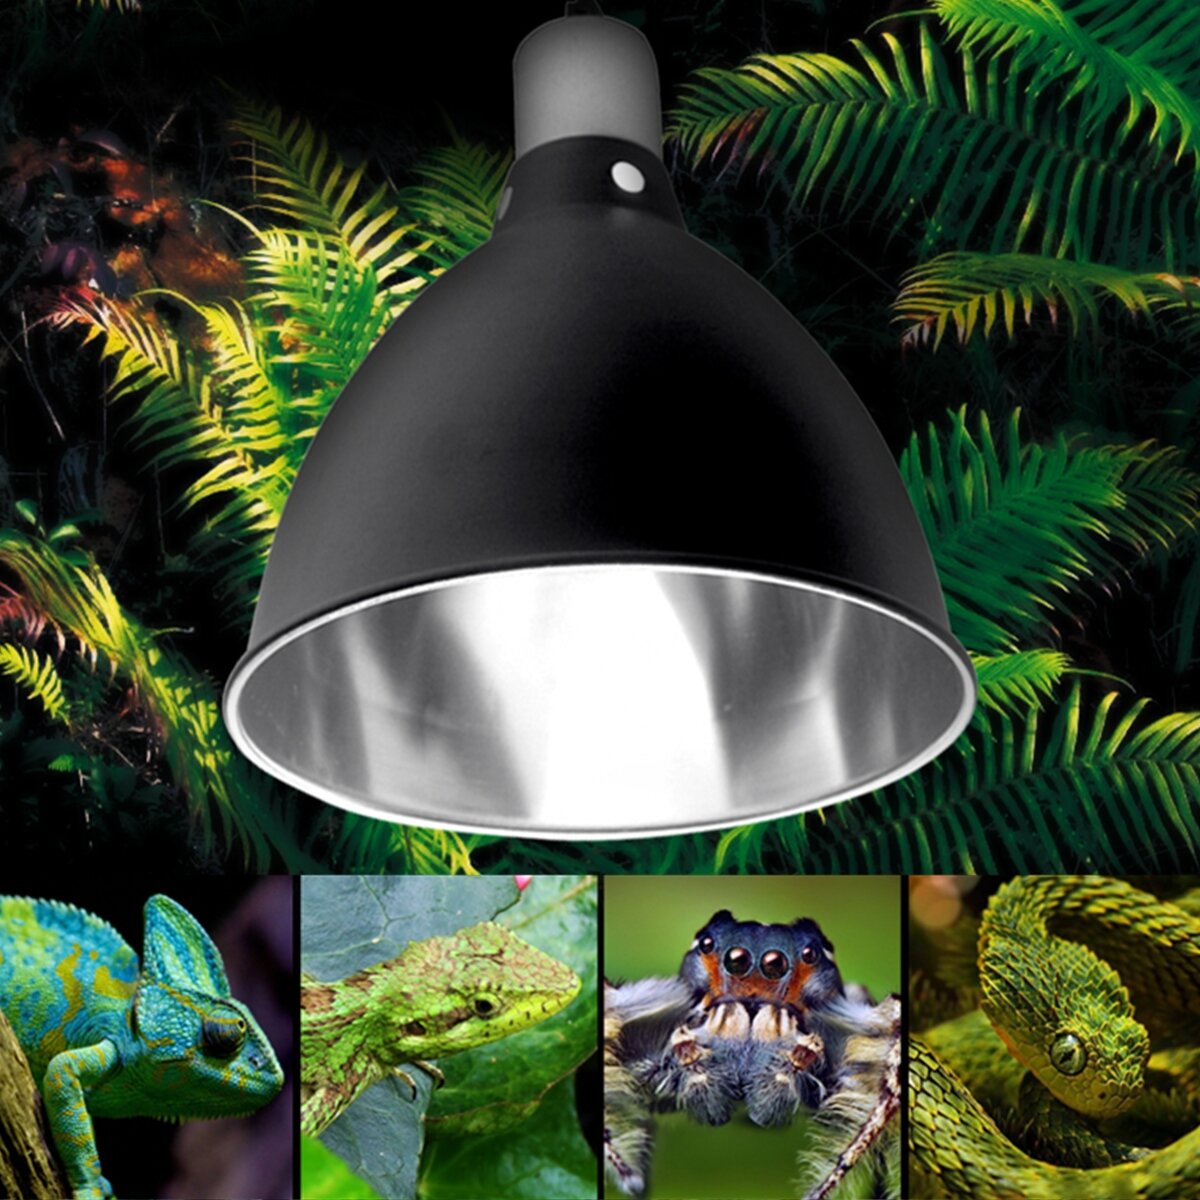 

E27 Ceramic Heat UV UVB Lamp Light Holder Reptile Tortoise Lampshade with Switch